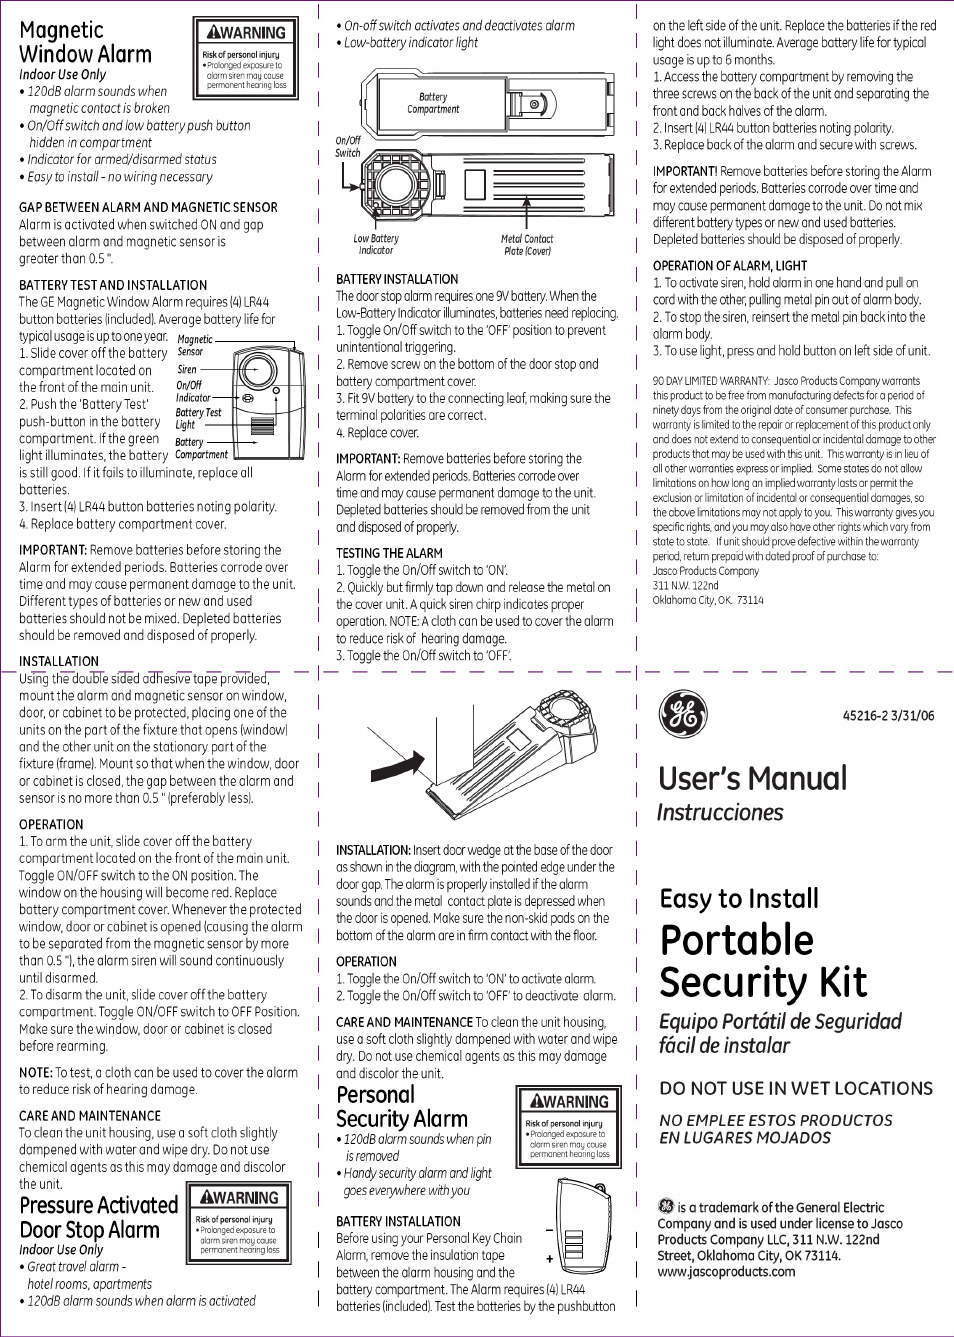 GE 45216 GE Portable Security Kit User Manual | 1 page